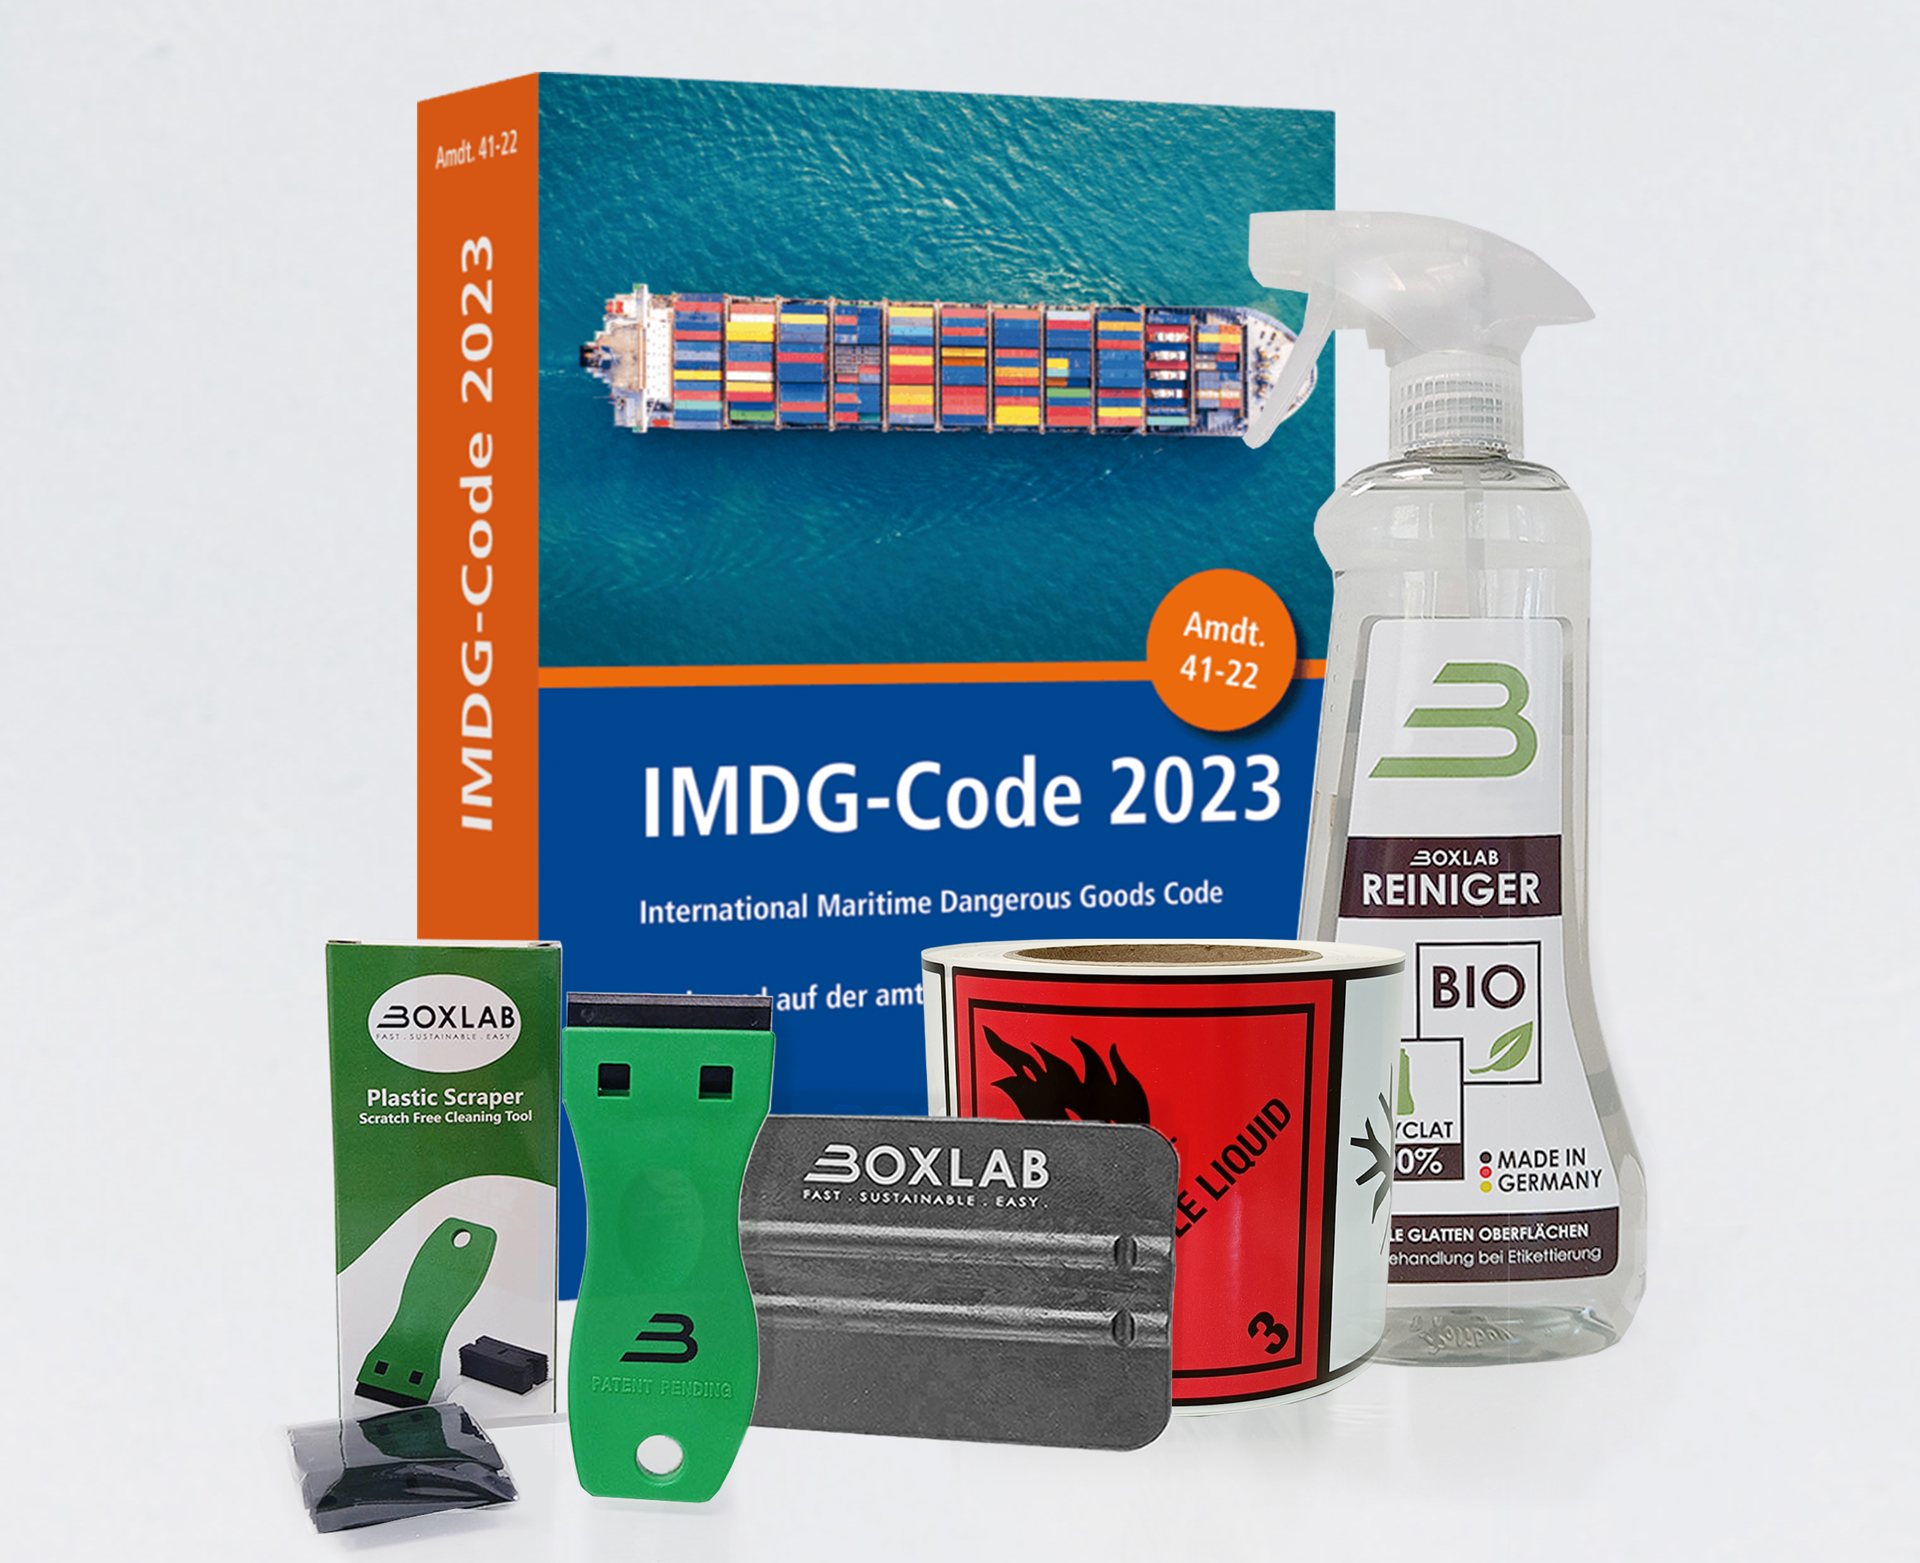 IMDG-Code 2023 Starter Kit - Gefahrzettel